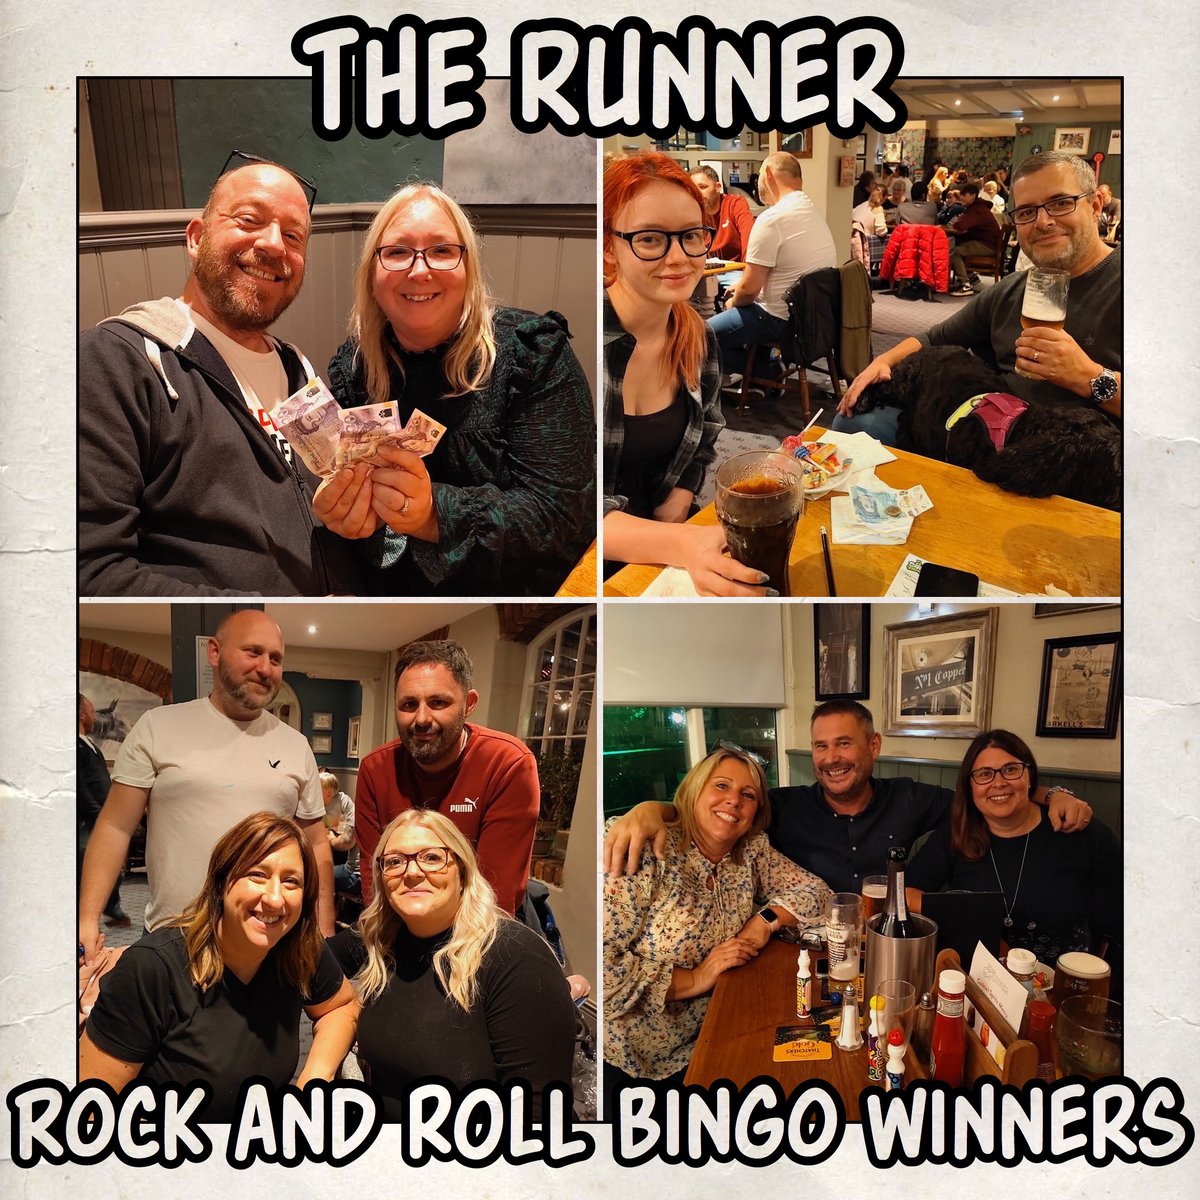 Just a few of our #RockAndRollBingo winners from #TheRunner in #Swindon last night